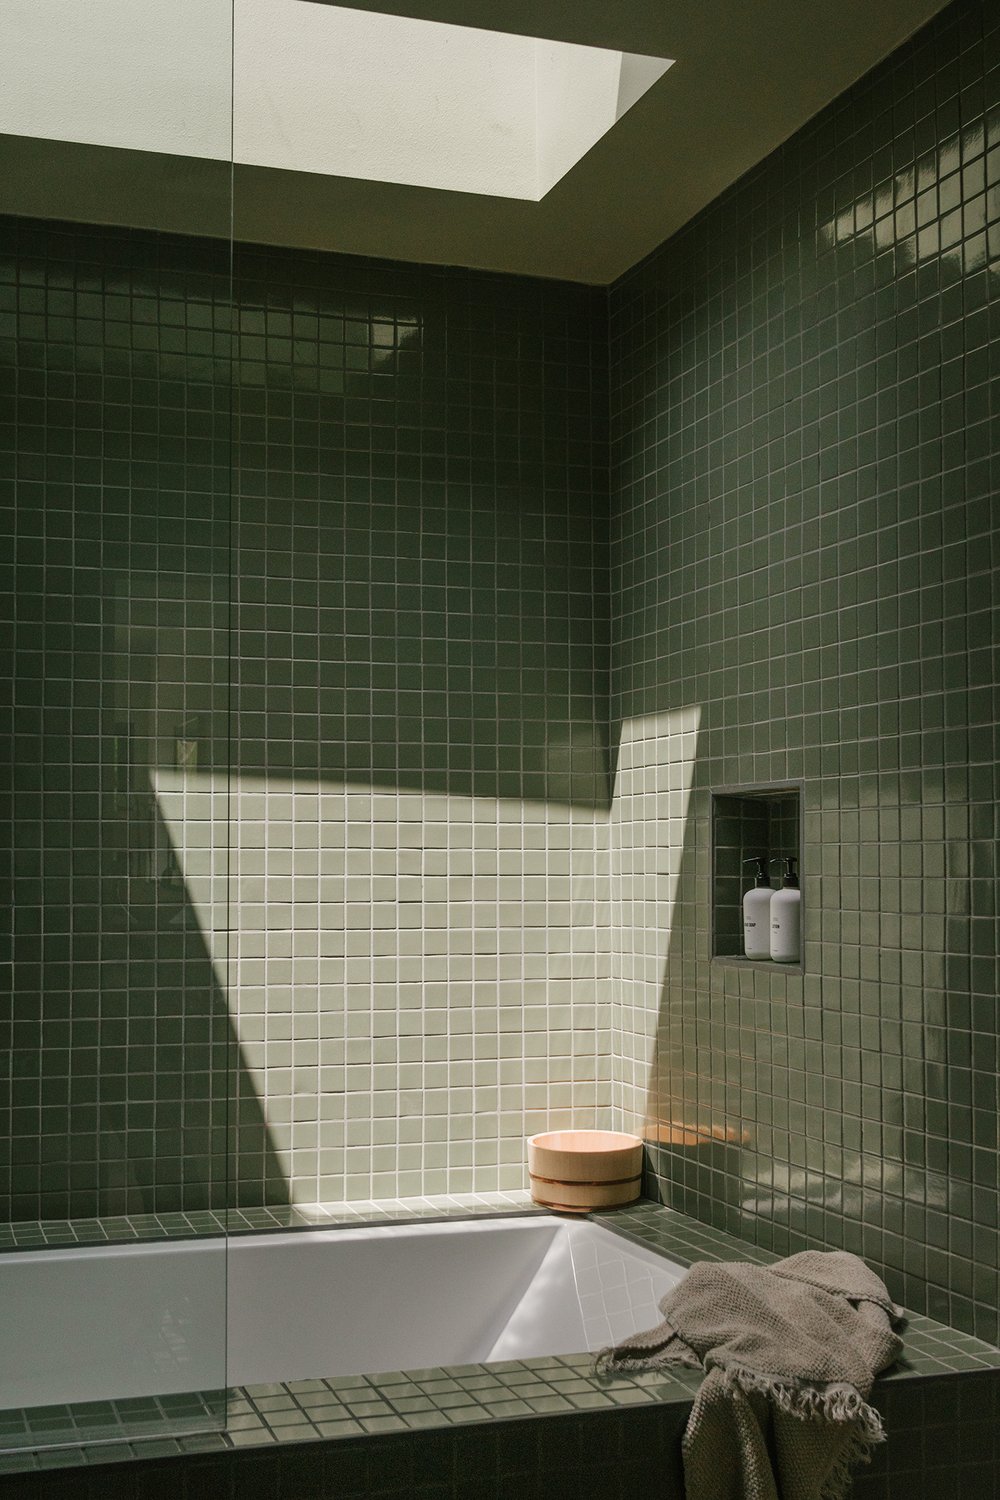 Green tiled bathroom